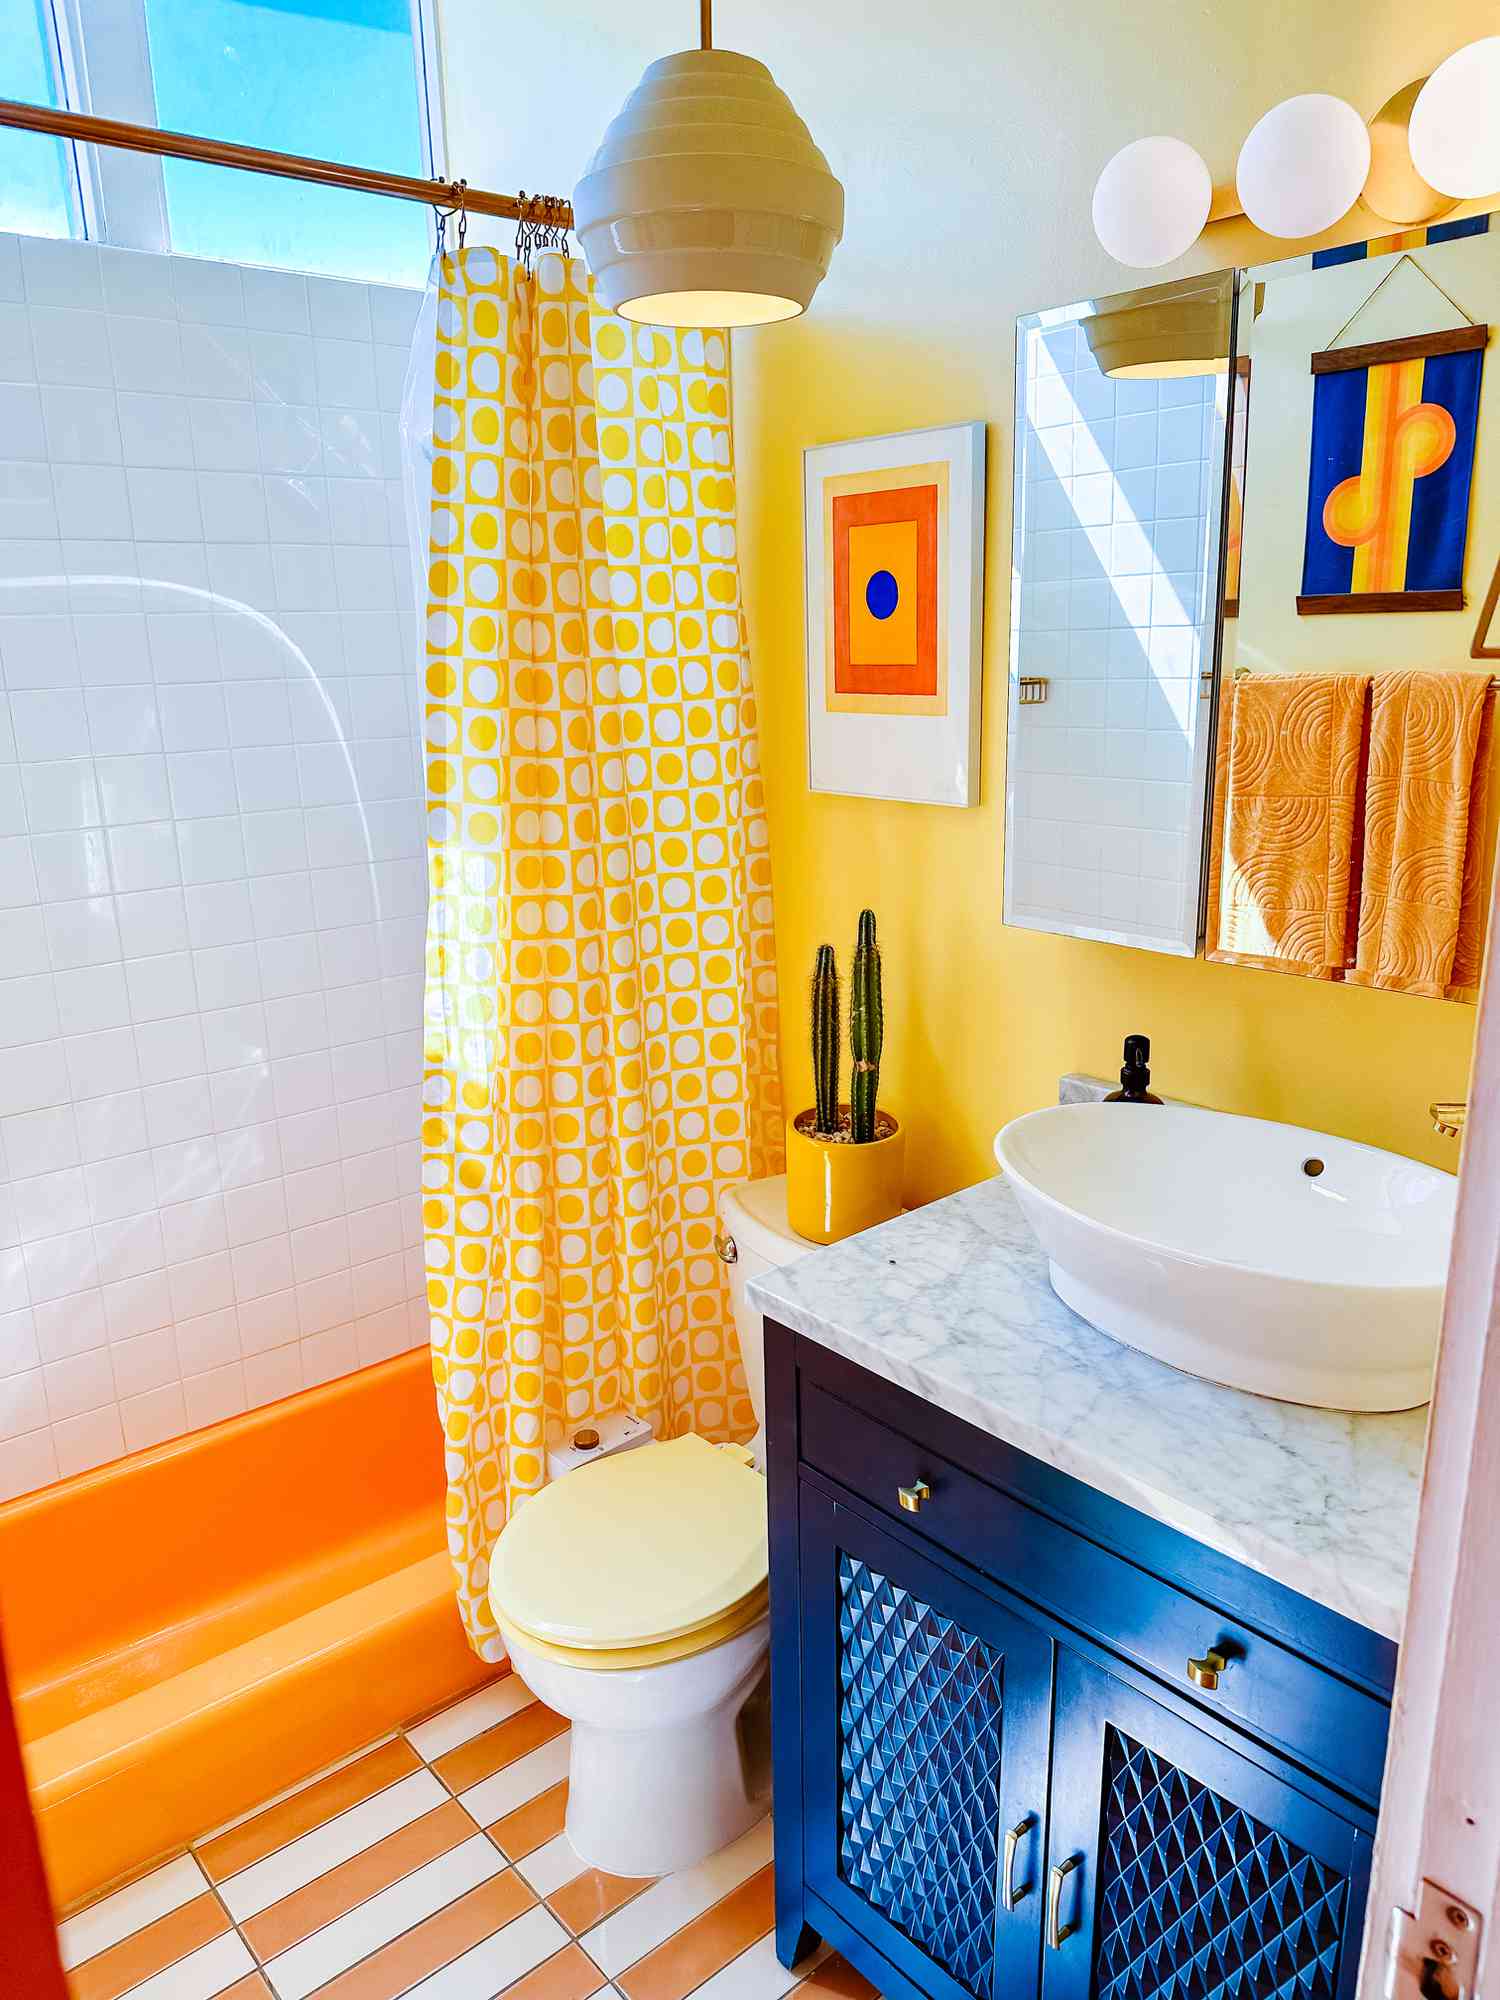 banheiro azul royal, amarelo e laranja